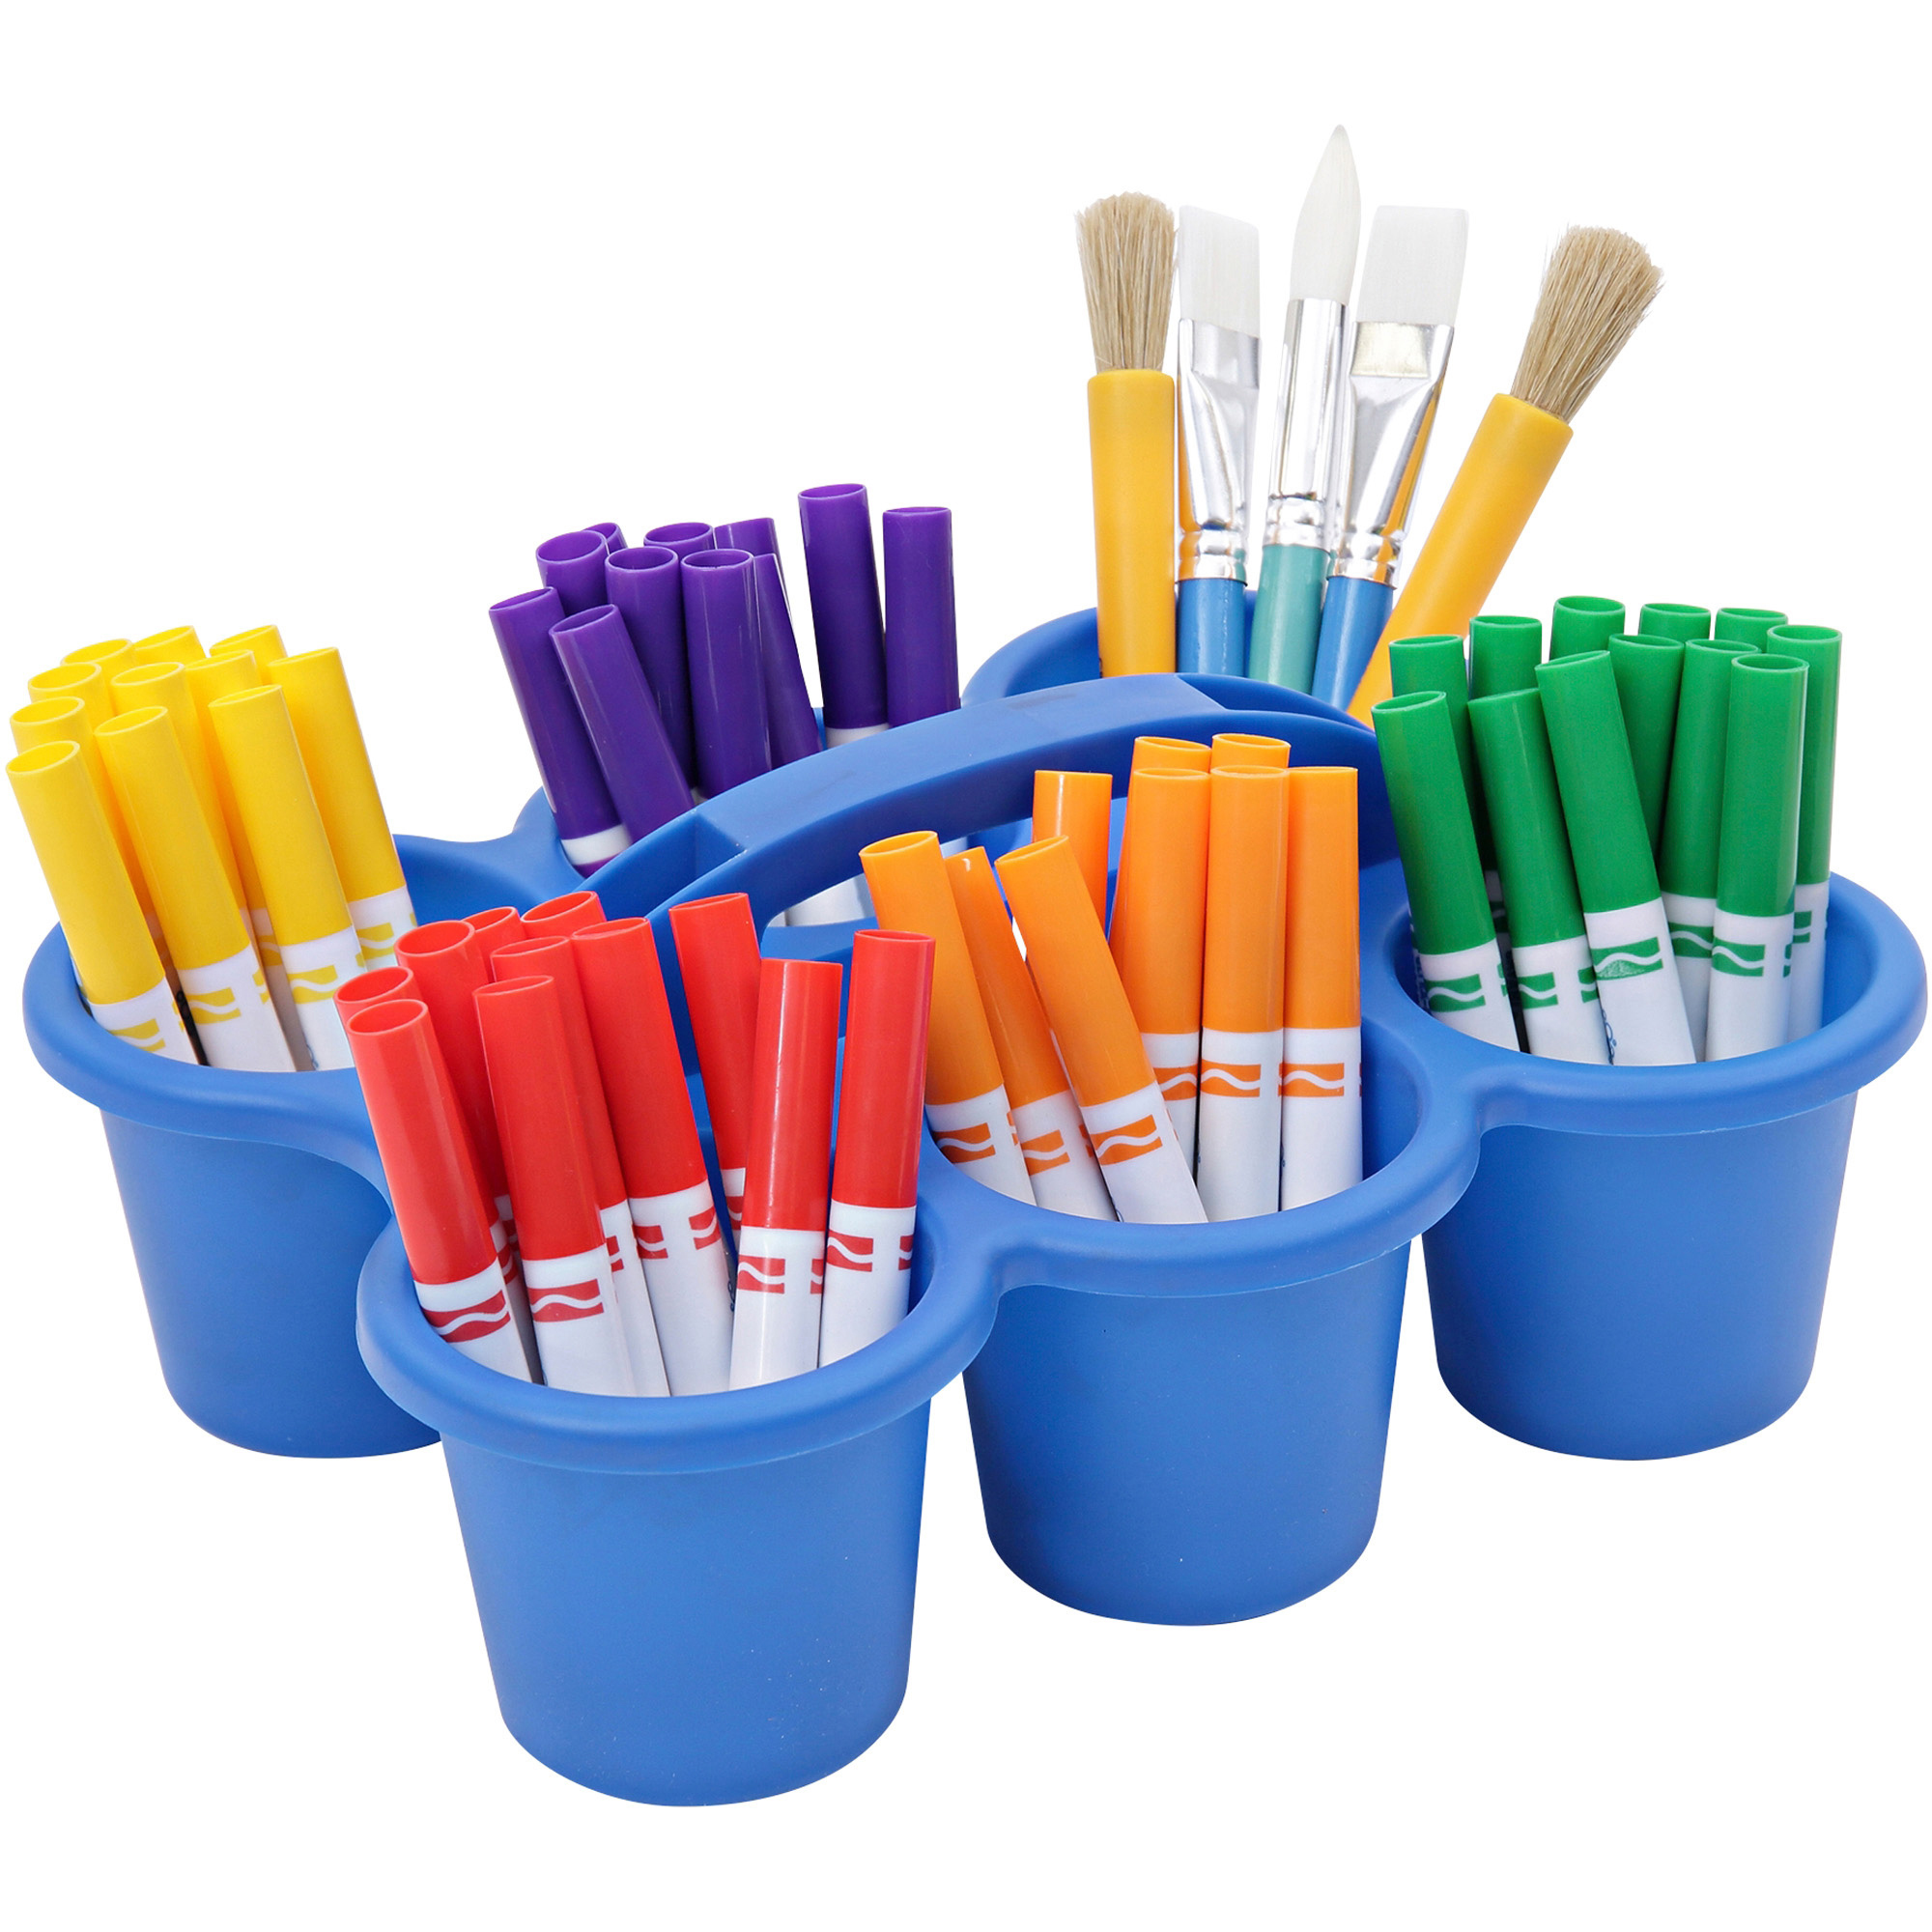 Deflecto 5 1/2 x 8 x 2 Blue Antimicrobial Kids Pencil Box